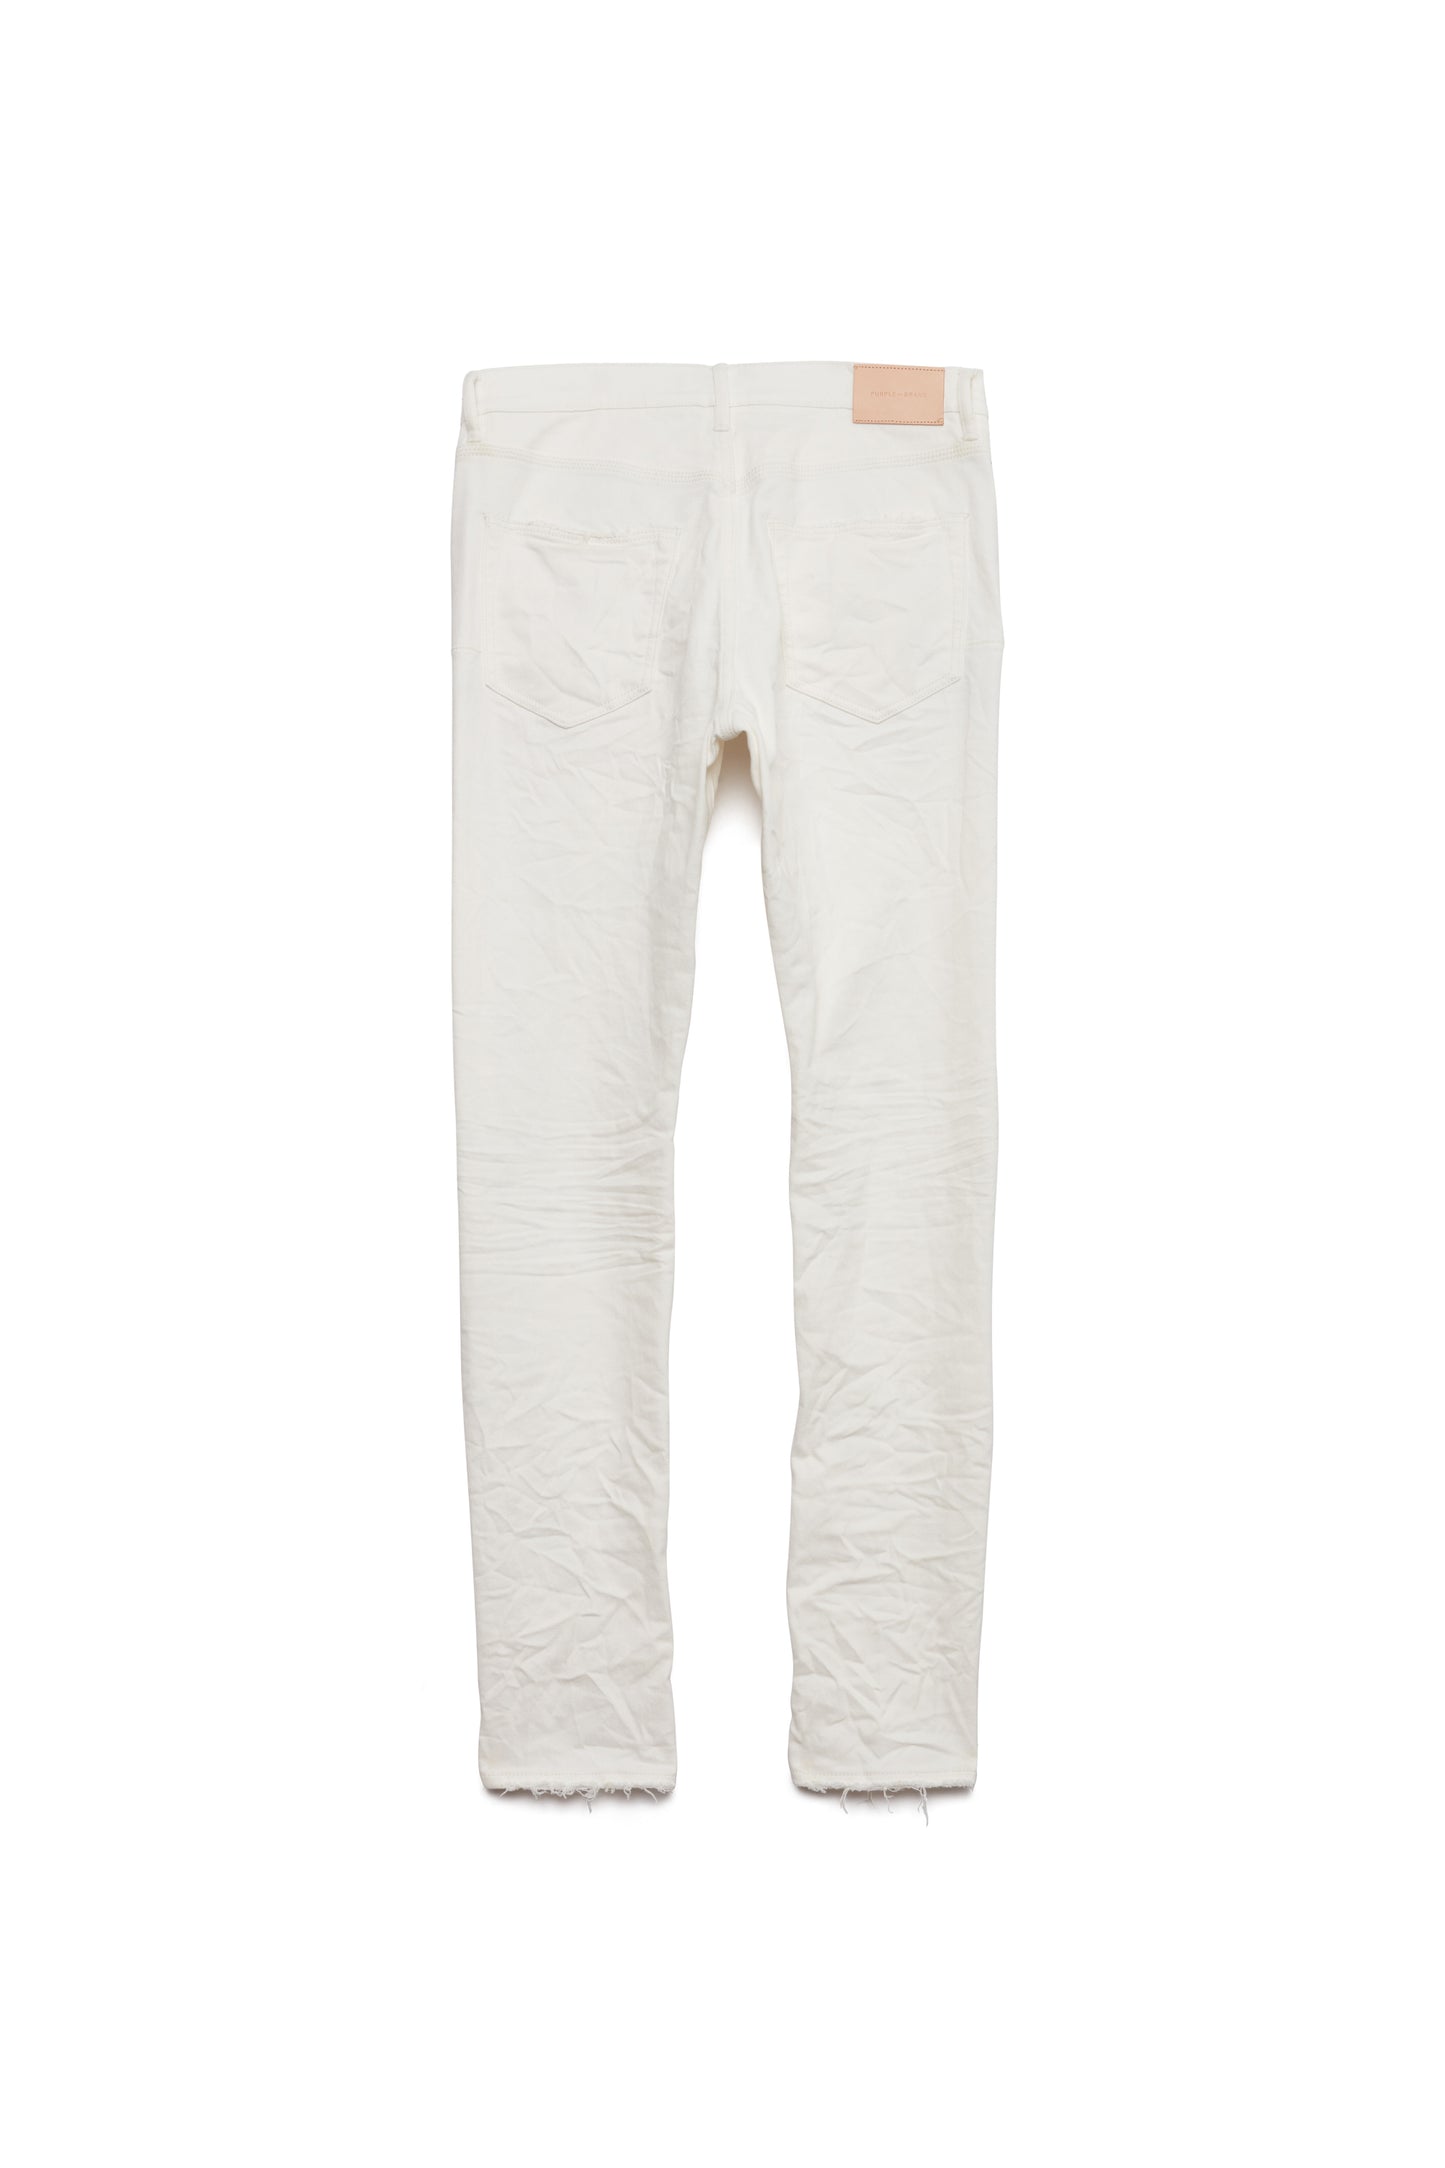 PURPLE BRAND - Men's Denim Jean - Low Rise Skinny - Style No. P001 -  Optic White - Back